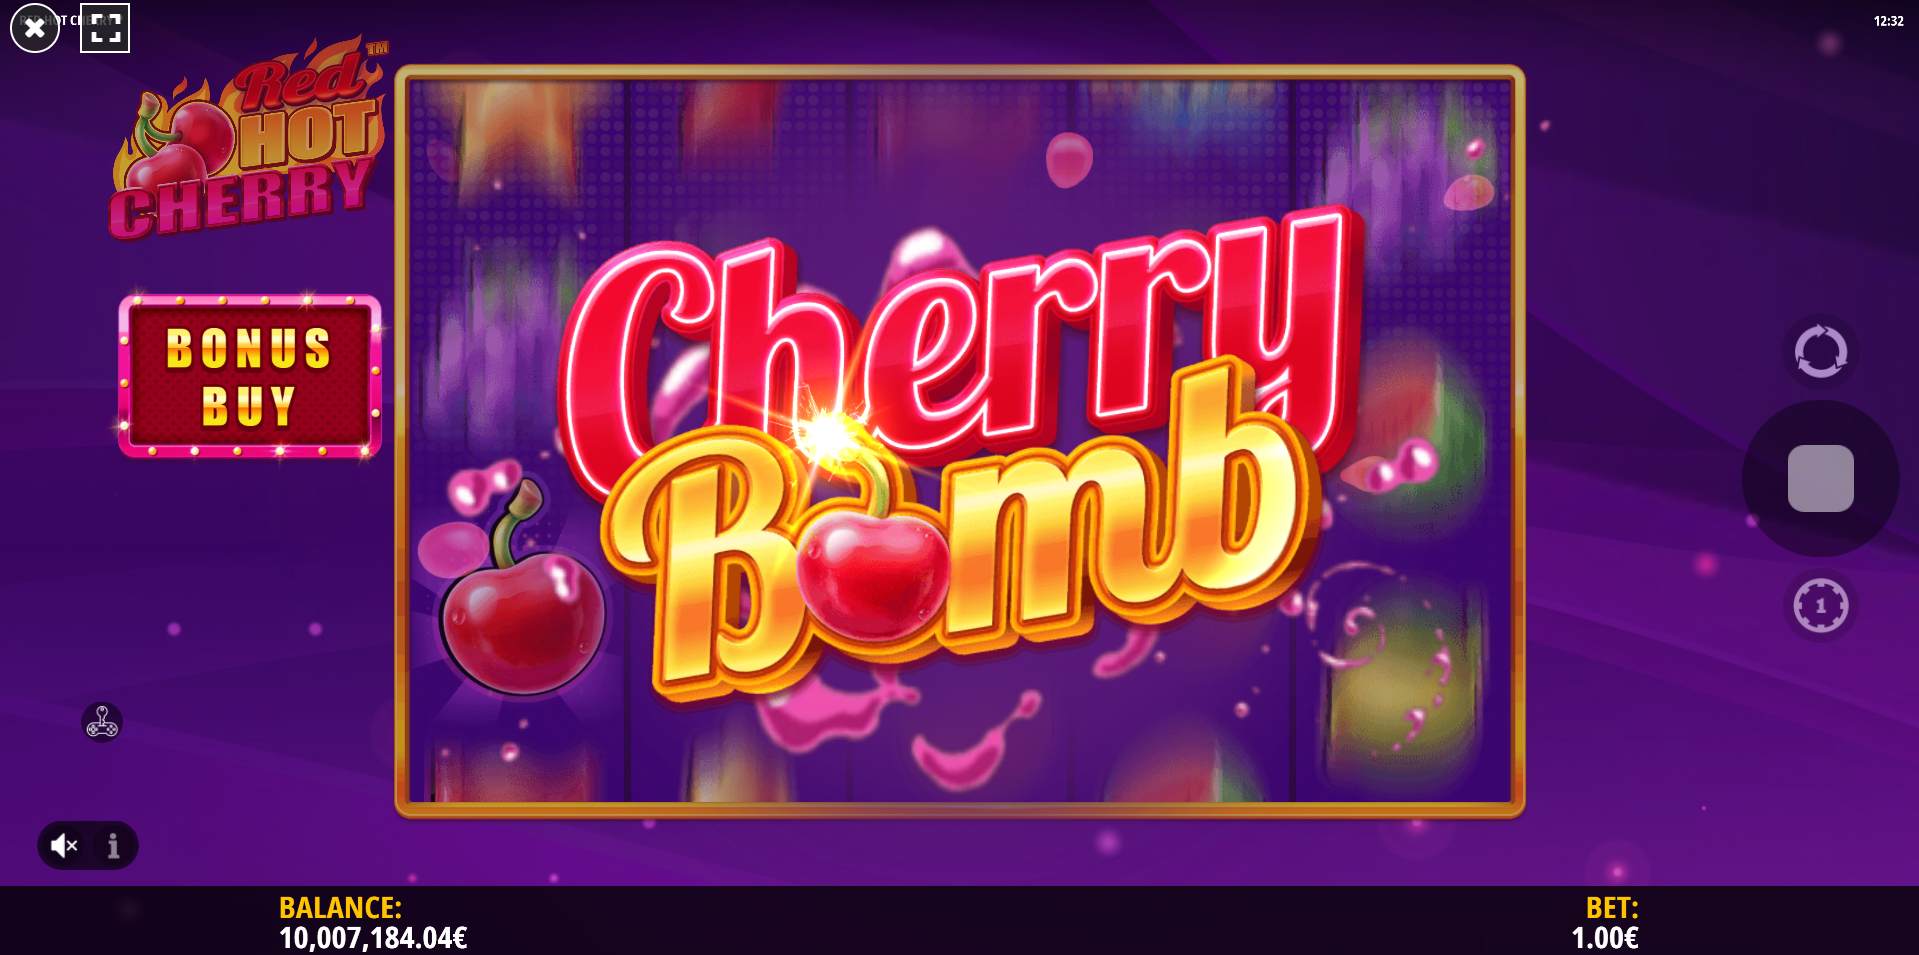 Red Hot Cherry - Cherry Bomb Modifier